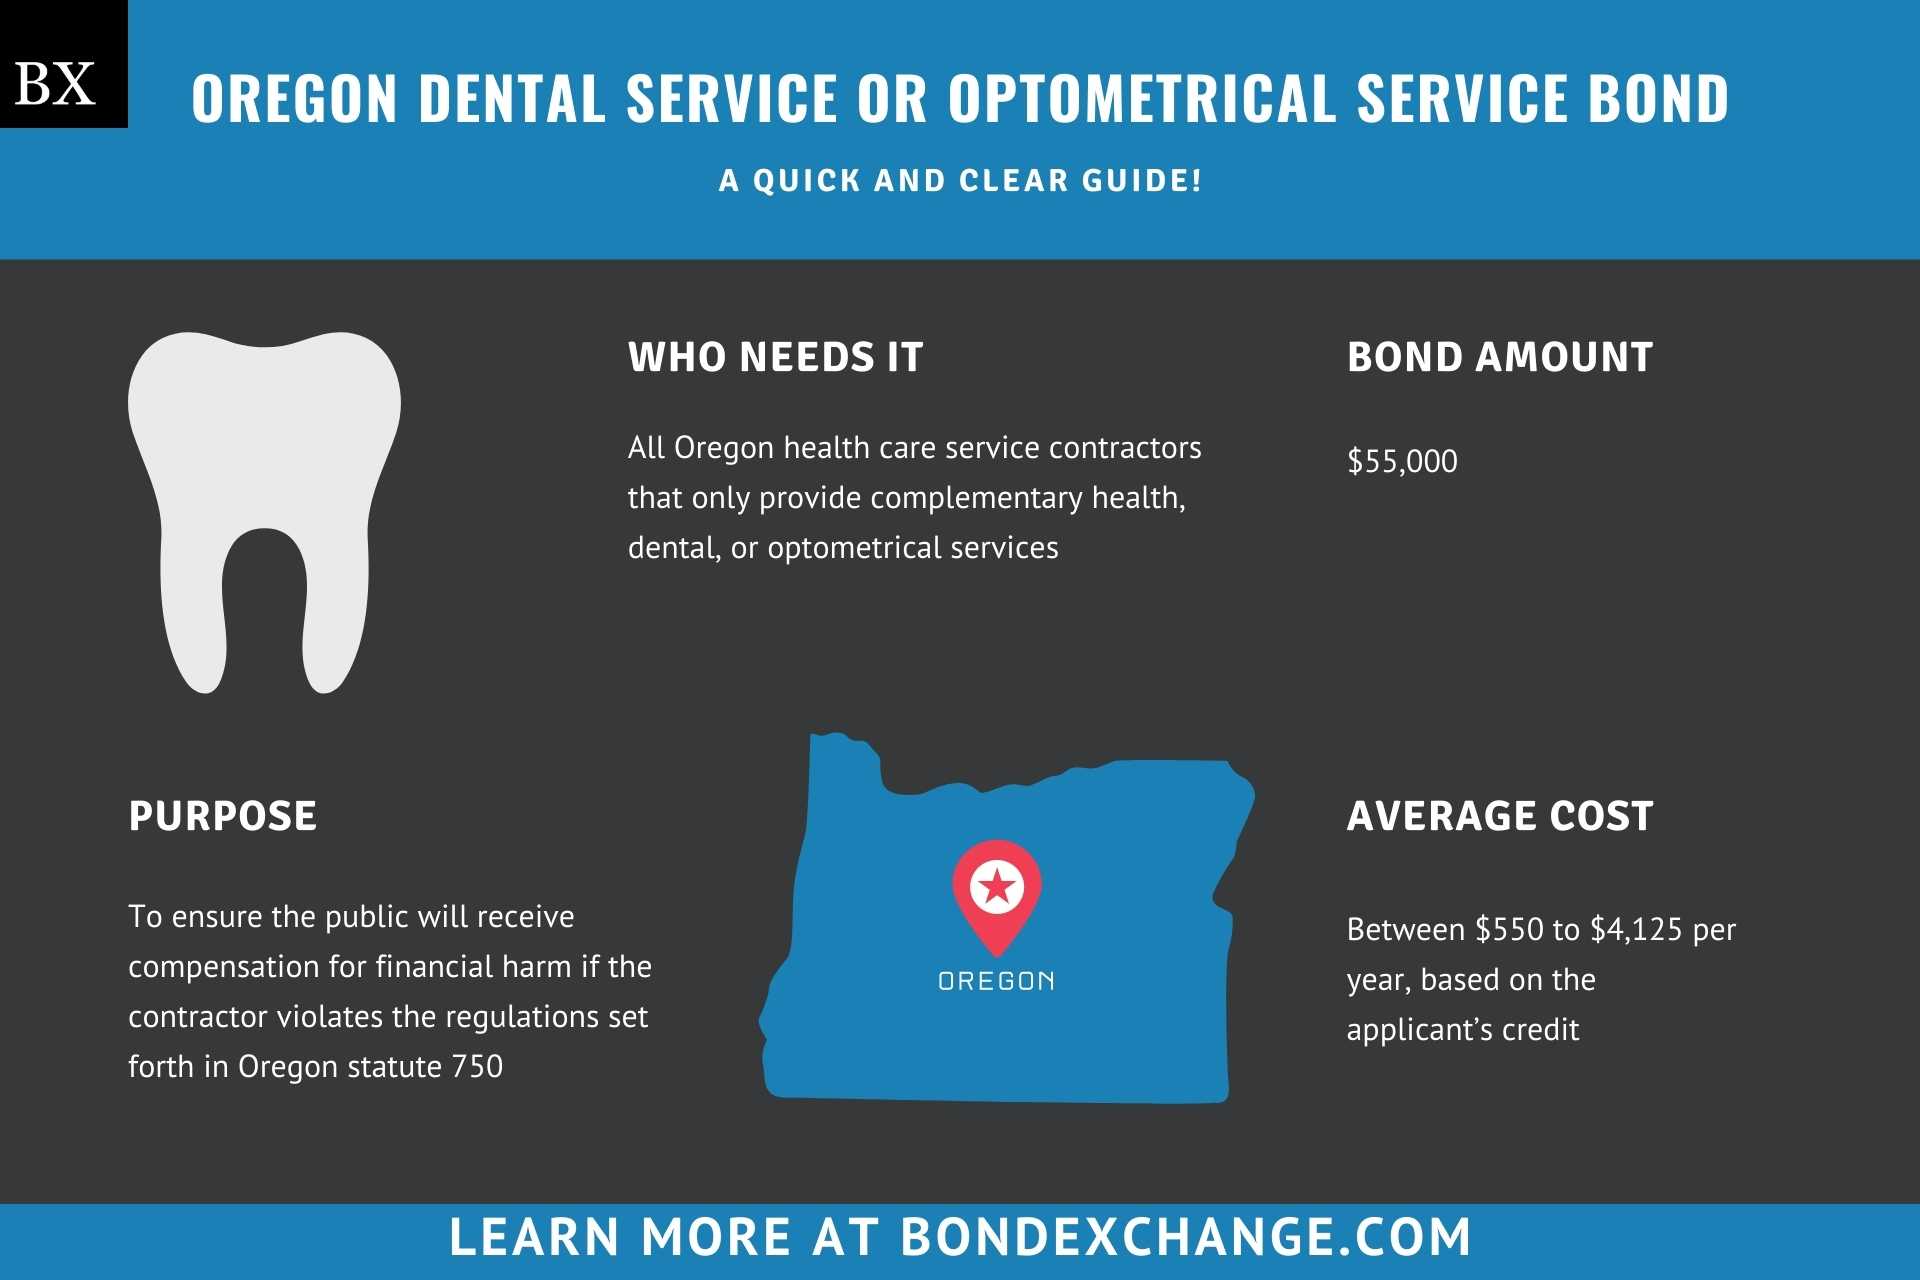 Oregon Dental Service or Optometrical Service Bond